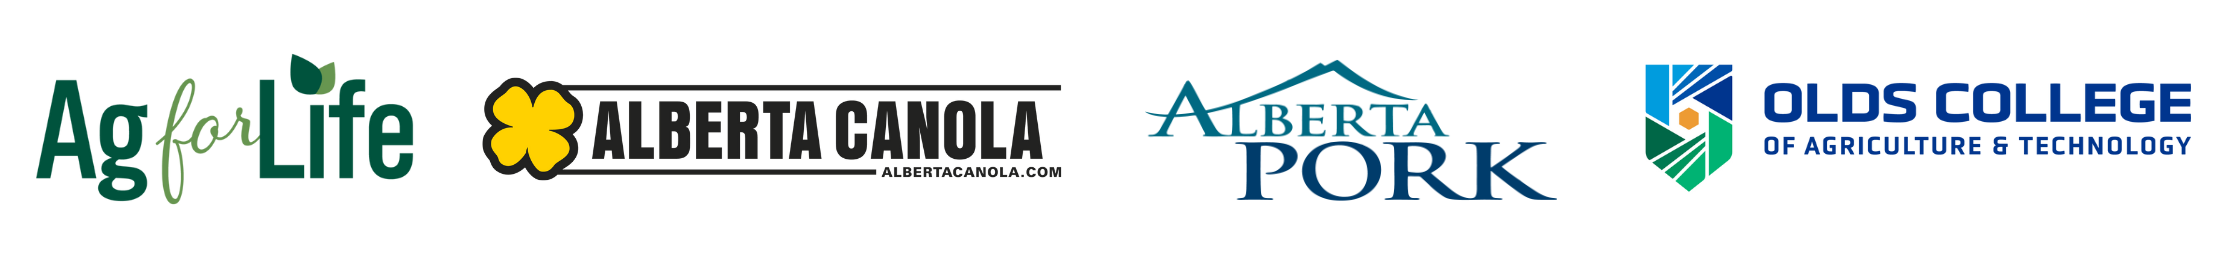 AB agricutlure Collab module logos-1